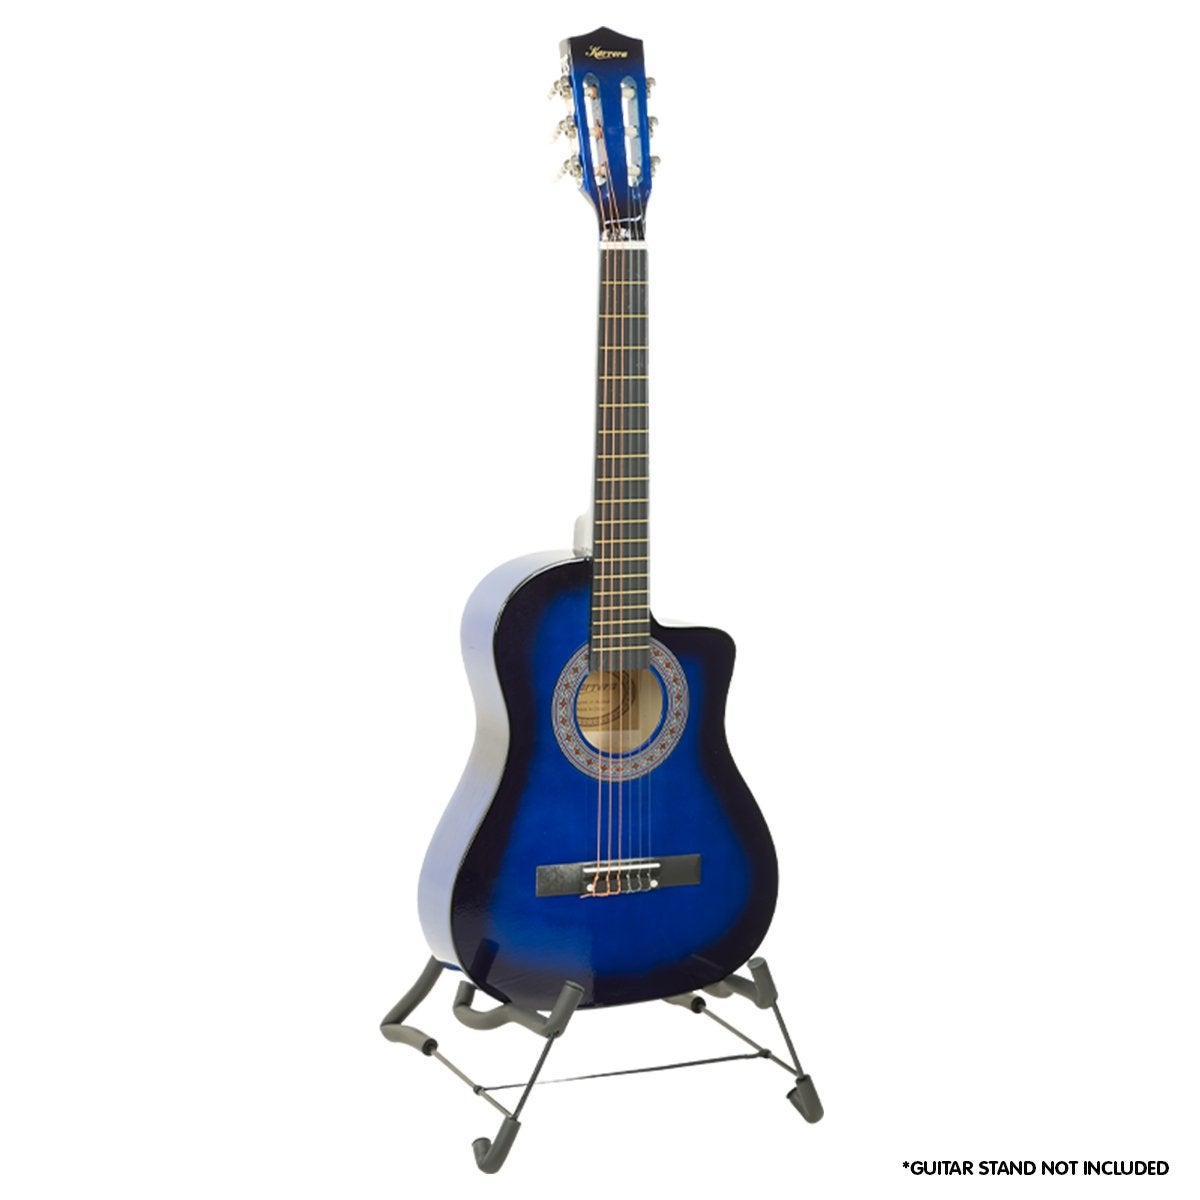 Karrera Childrens Acoustic Guitar Ideal Kids Gift 1/2 Size - Blue